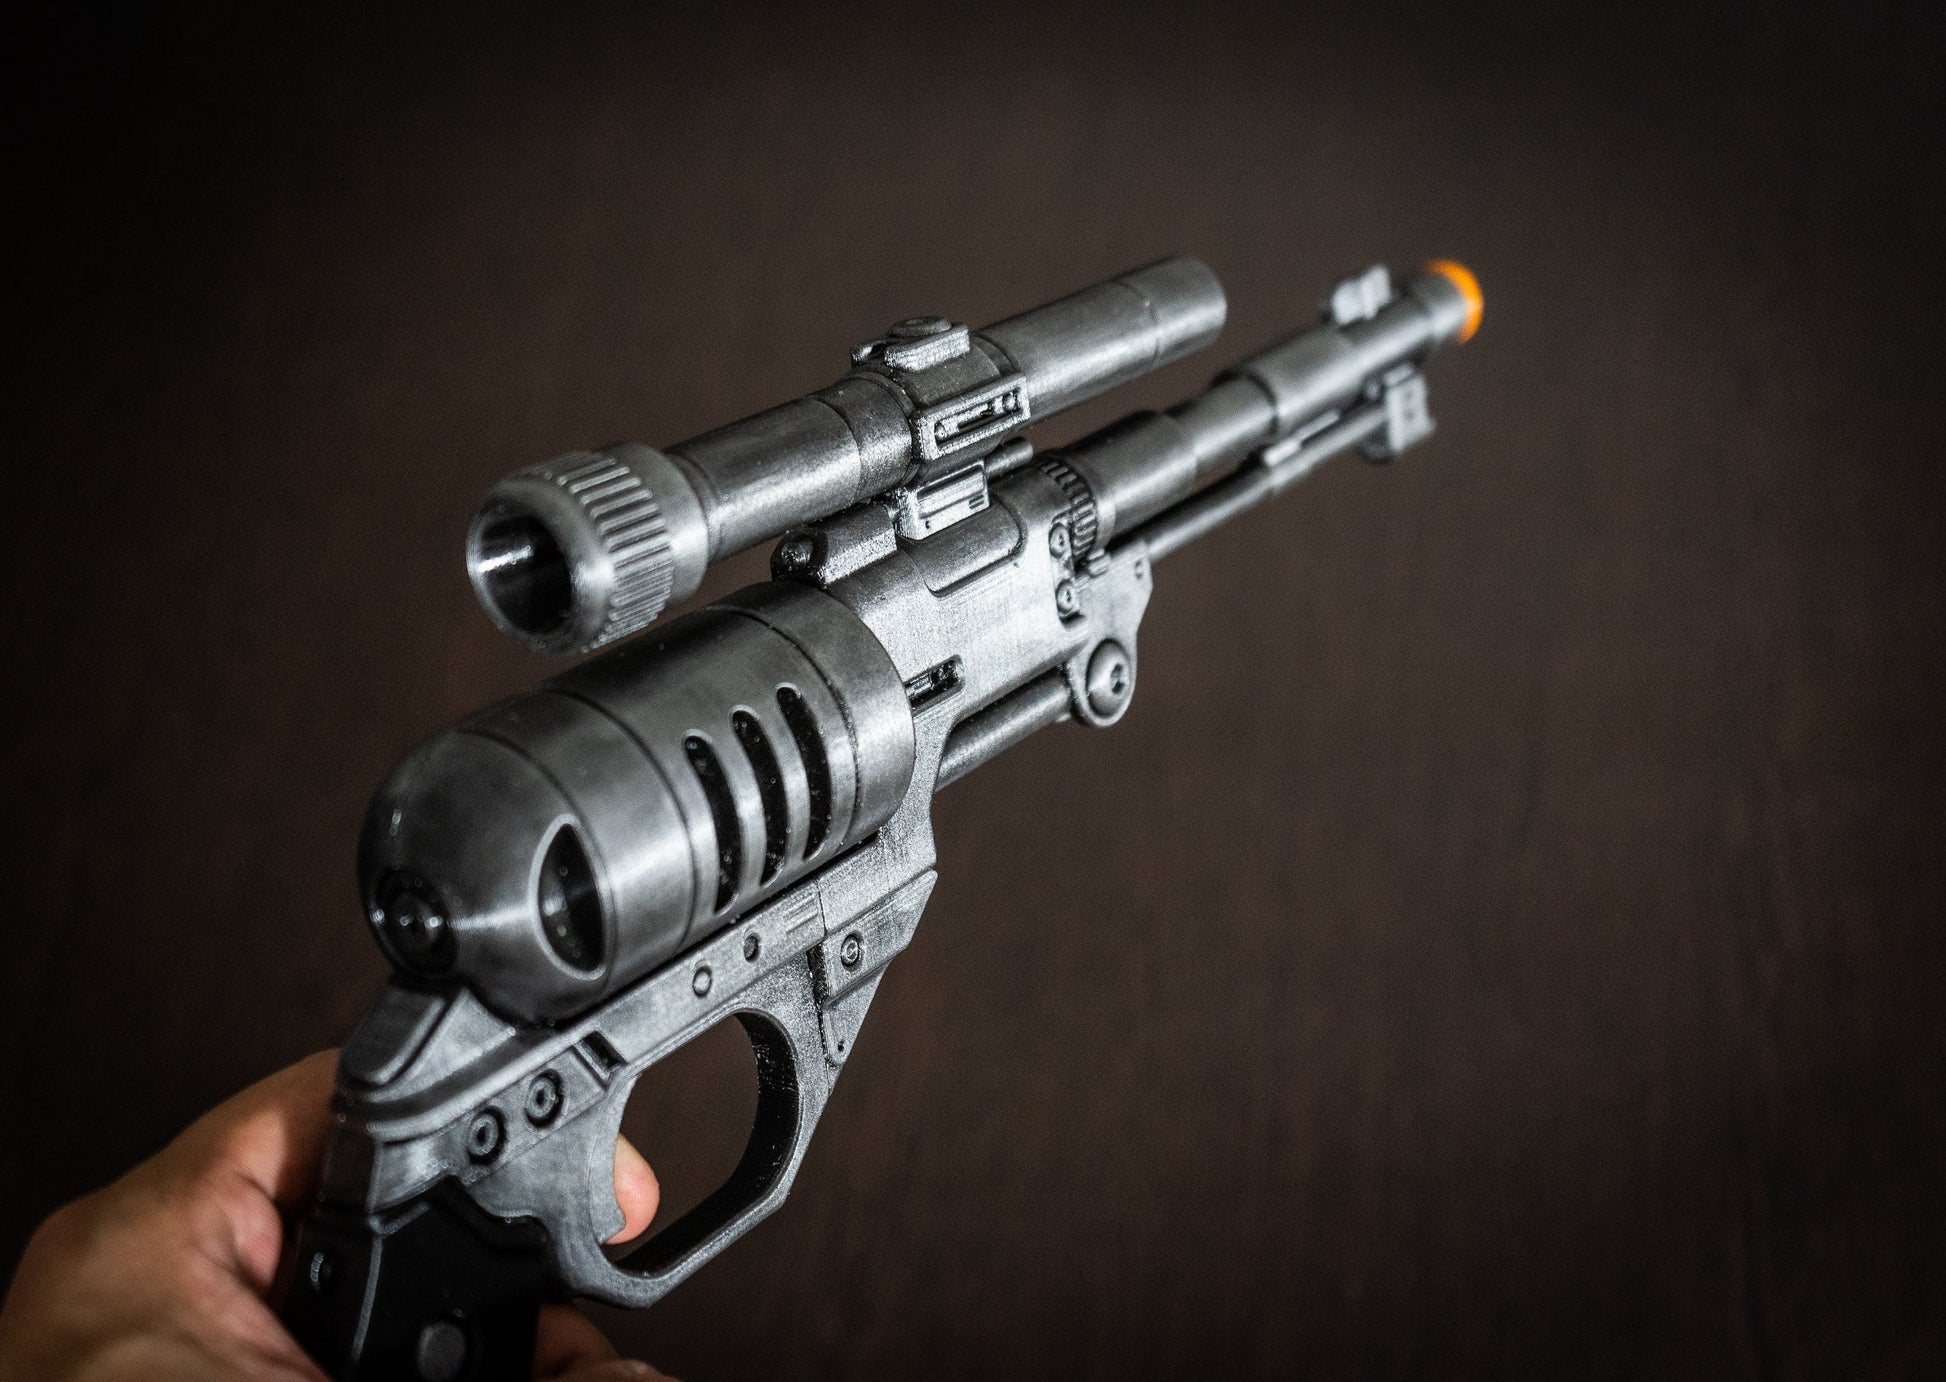 DE-10 blaster pistol | Star Wars Replica | Star Wars Props | Star Wars Cosplay - 3DPrintProps